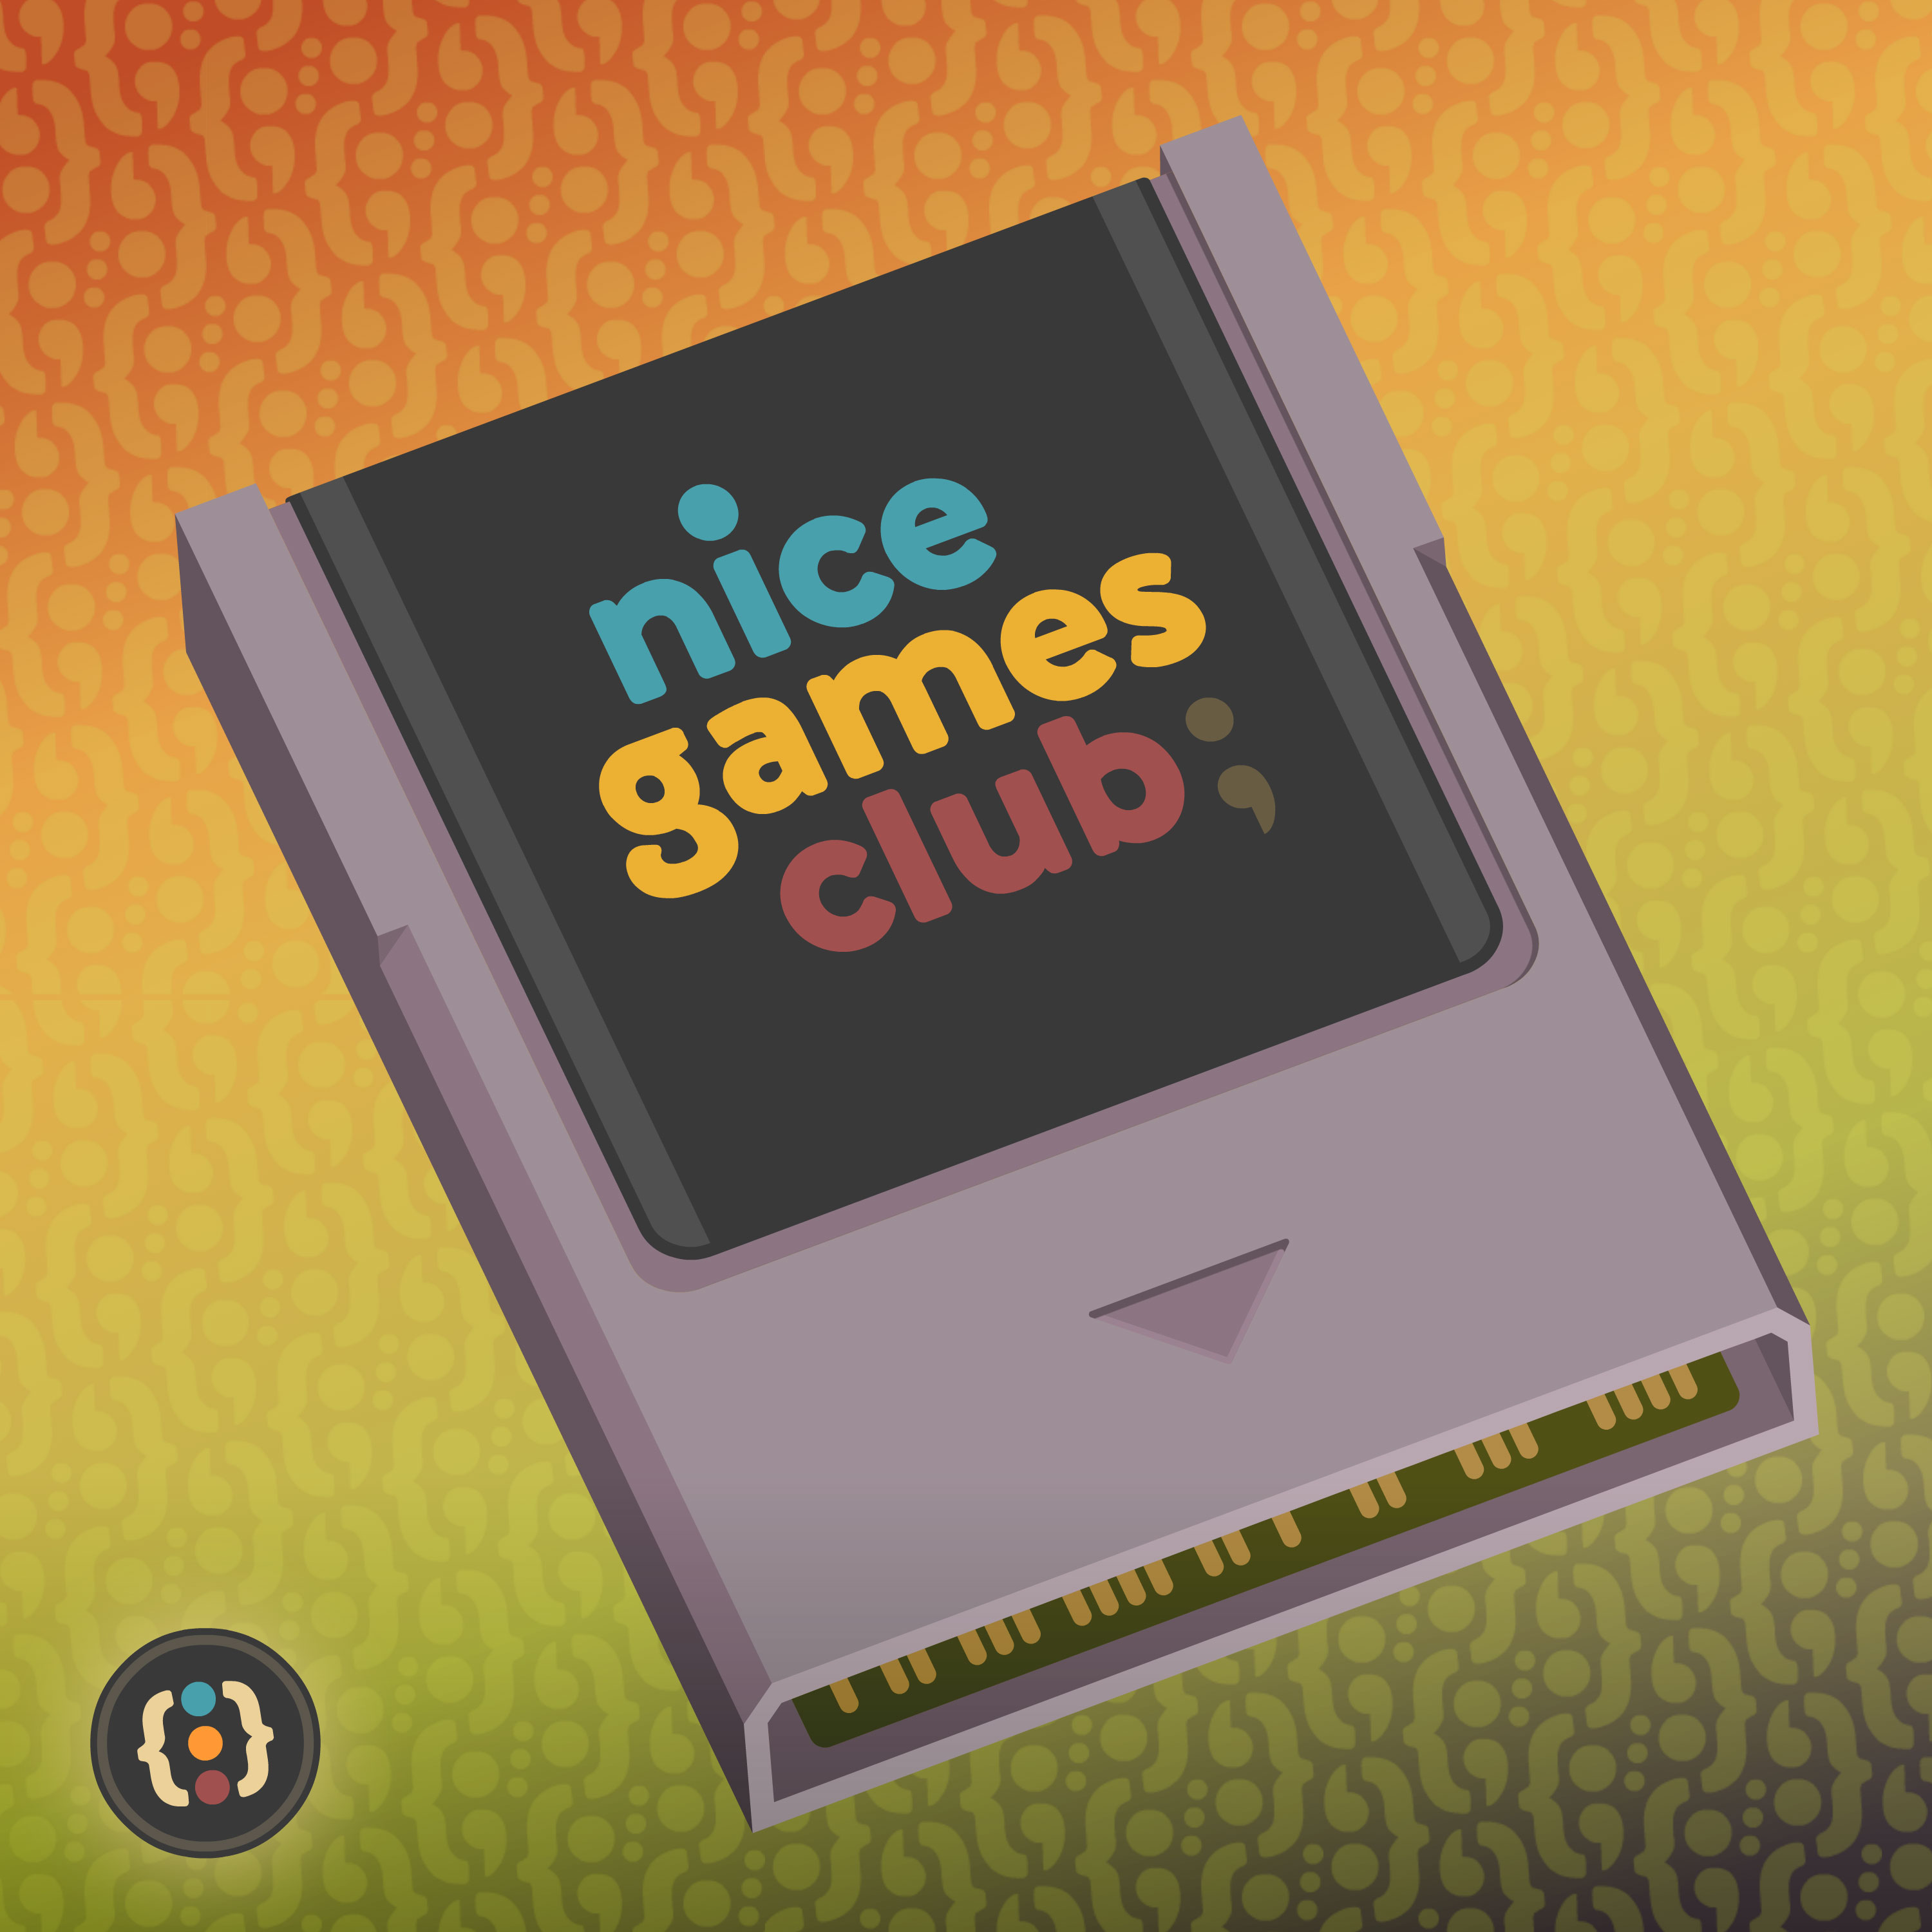 Nice Games Club - a gamedev podcast!